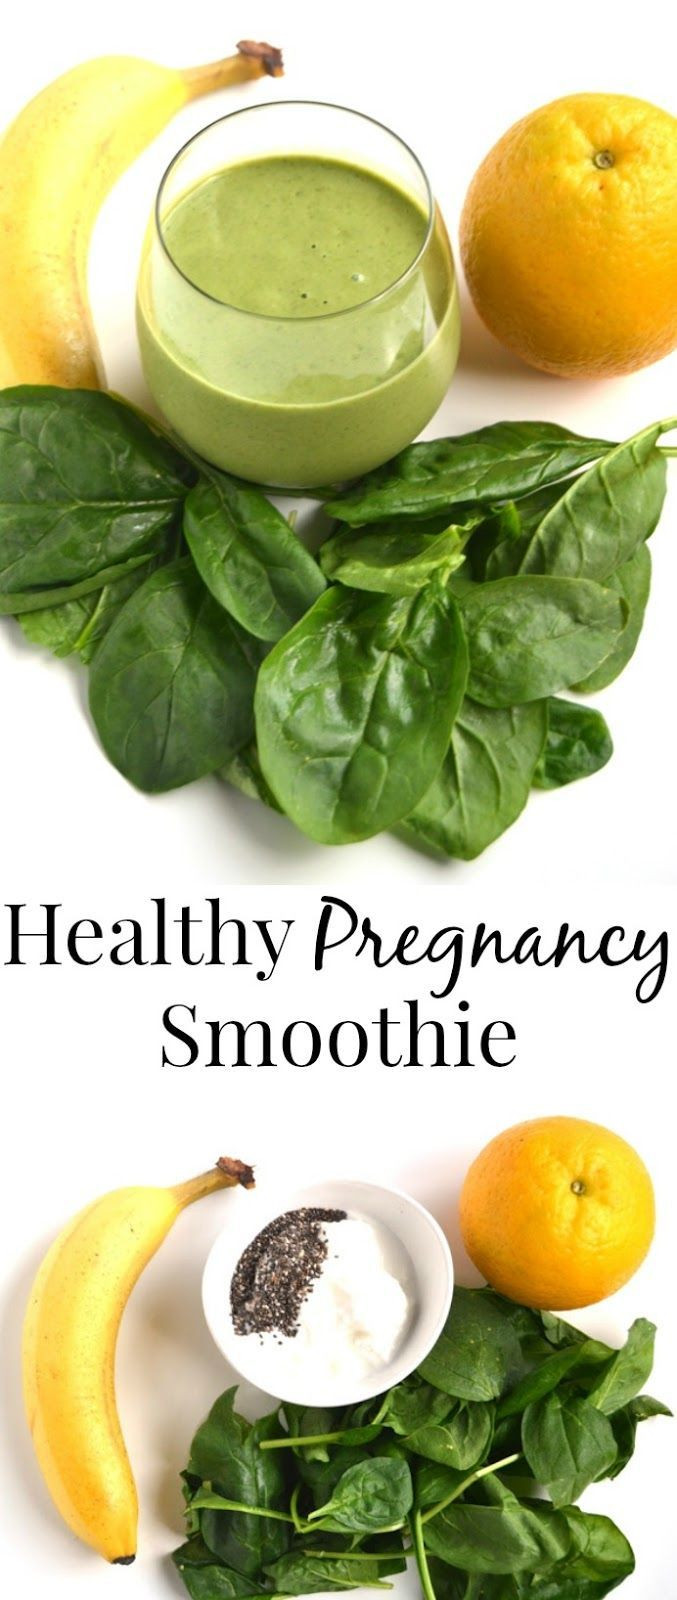 Pregnancy Smoothie Recipes
 Healthy Pregnancy Smoothie